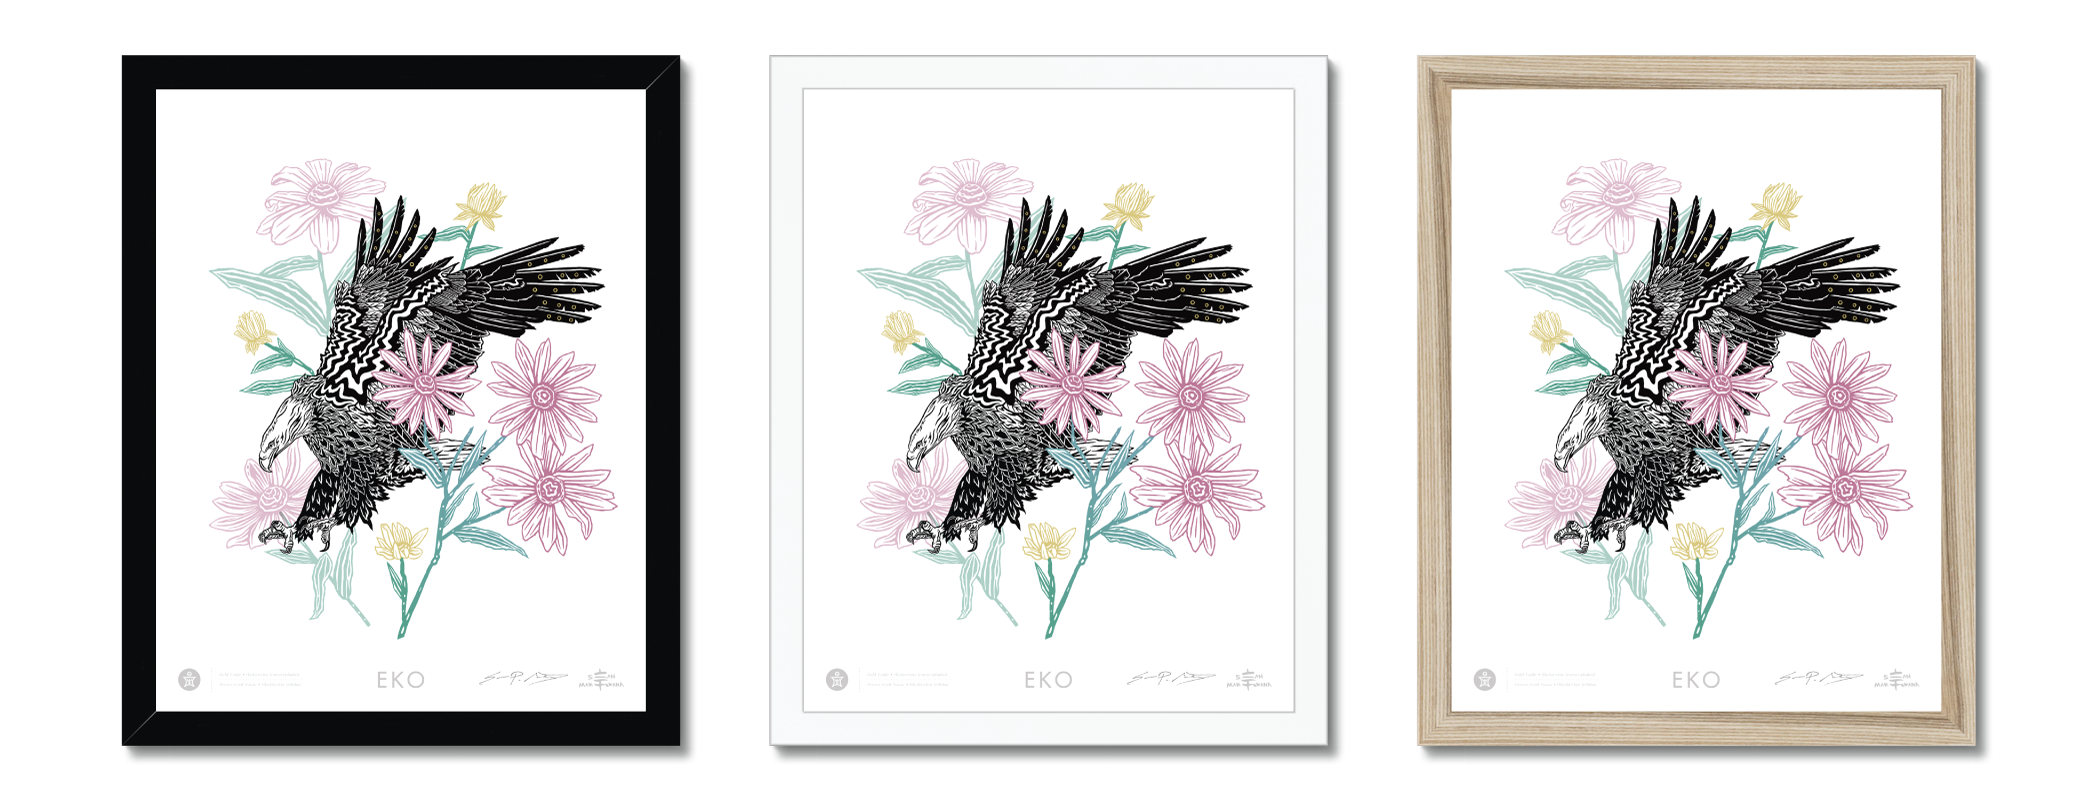 American Eagle Framed Prints by Artist & Designer Sean Martorana